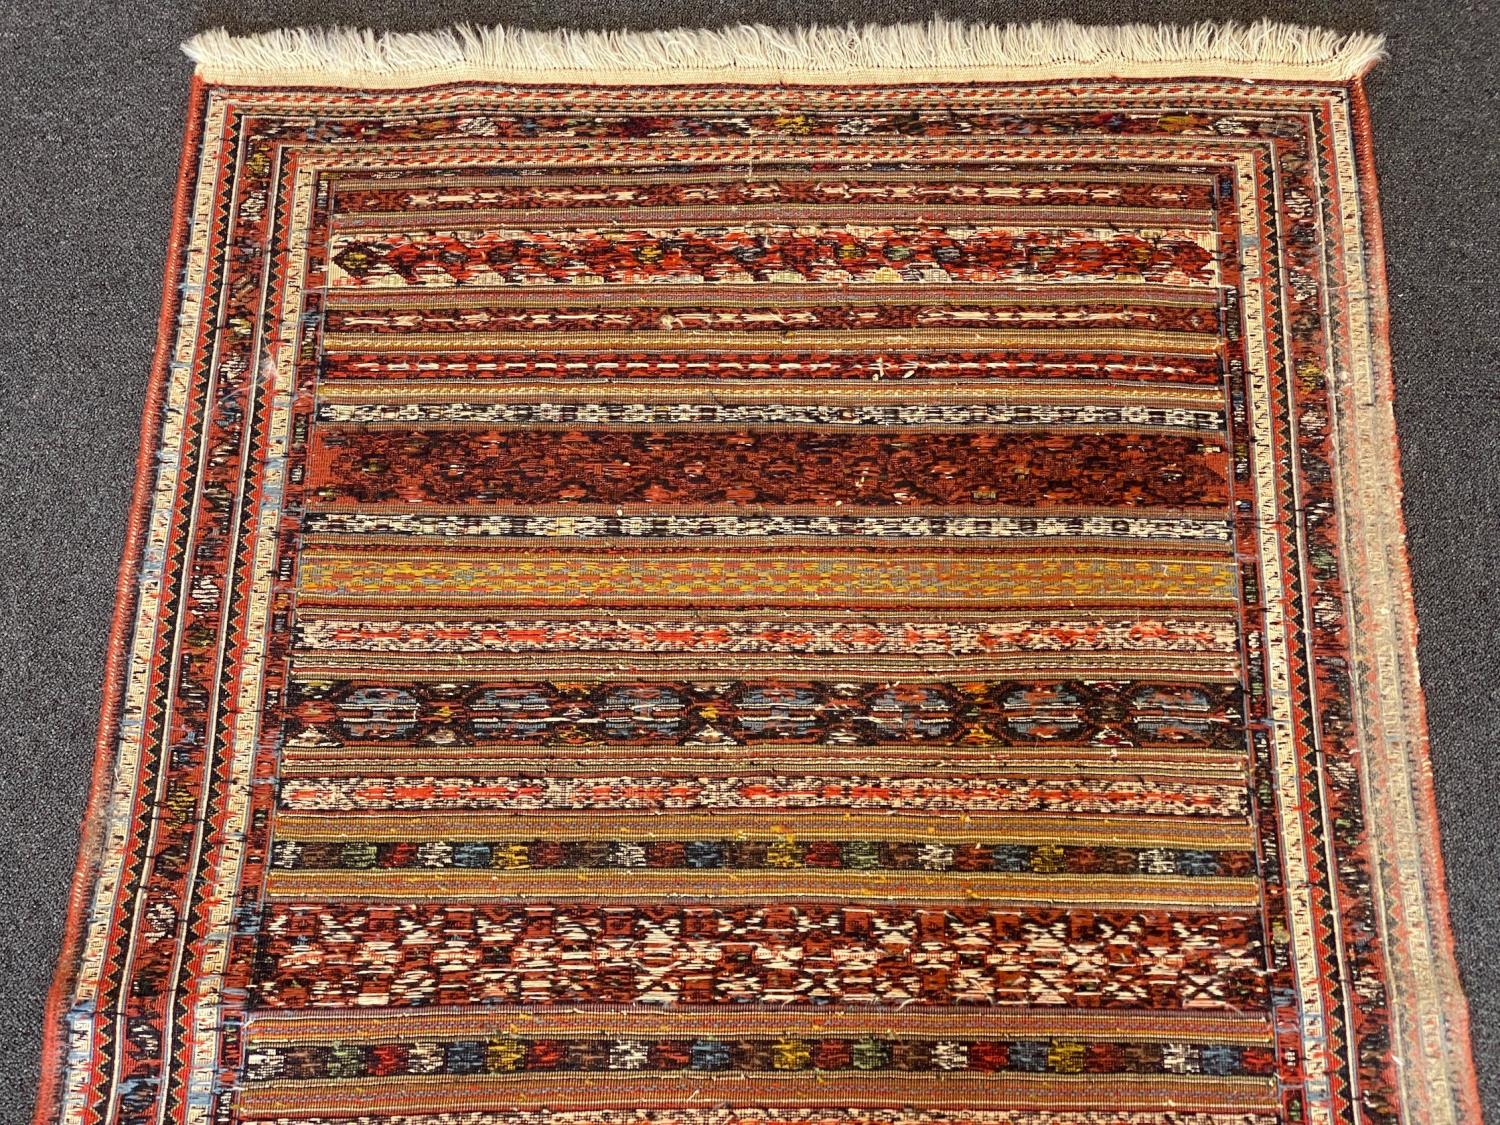 A fine Sumac flatweave polychrome rug 160 x 100 cms - Image 7 of 7